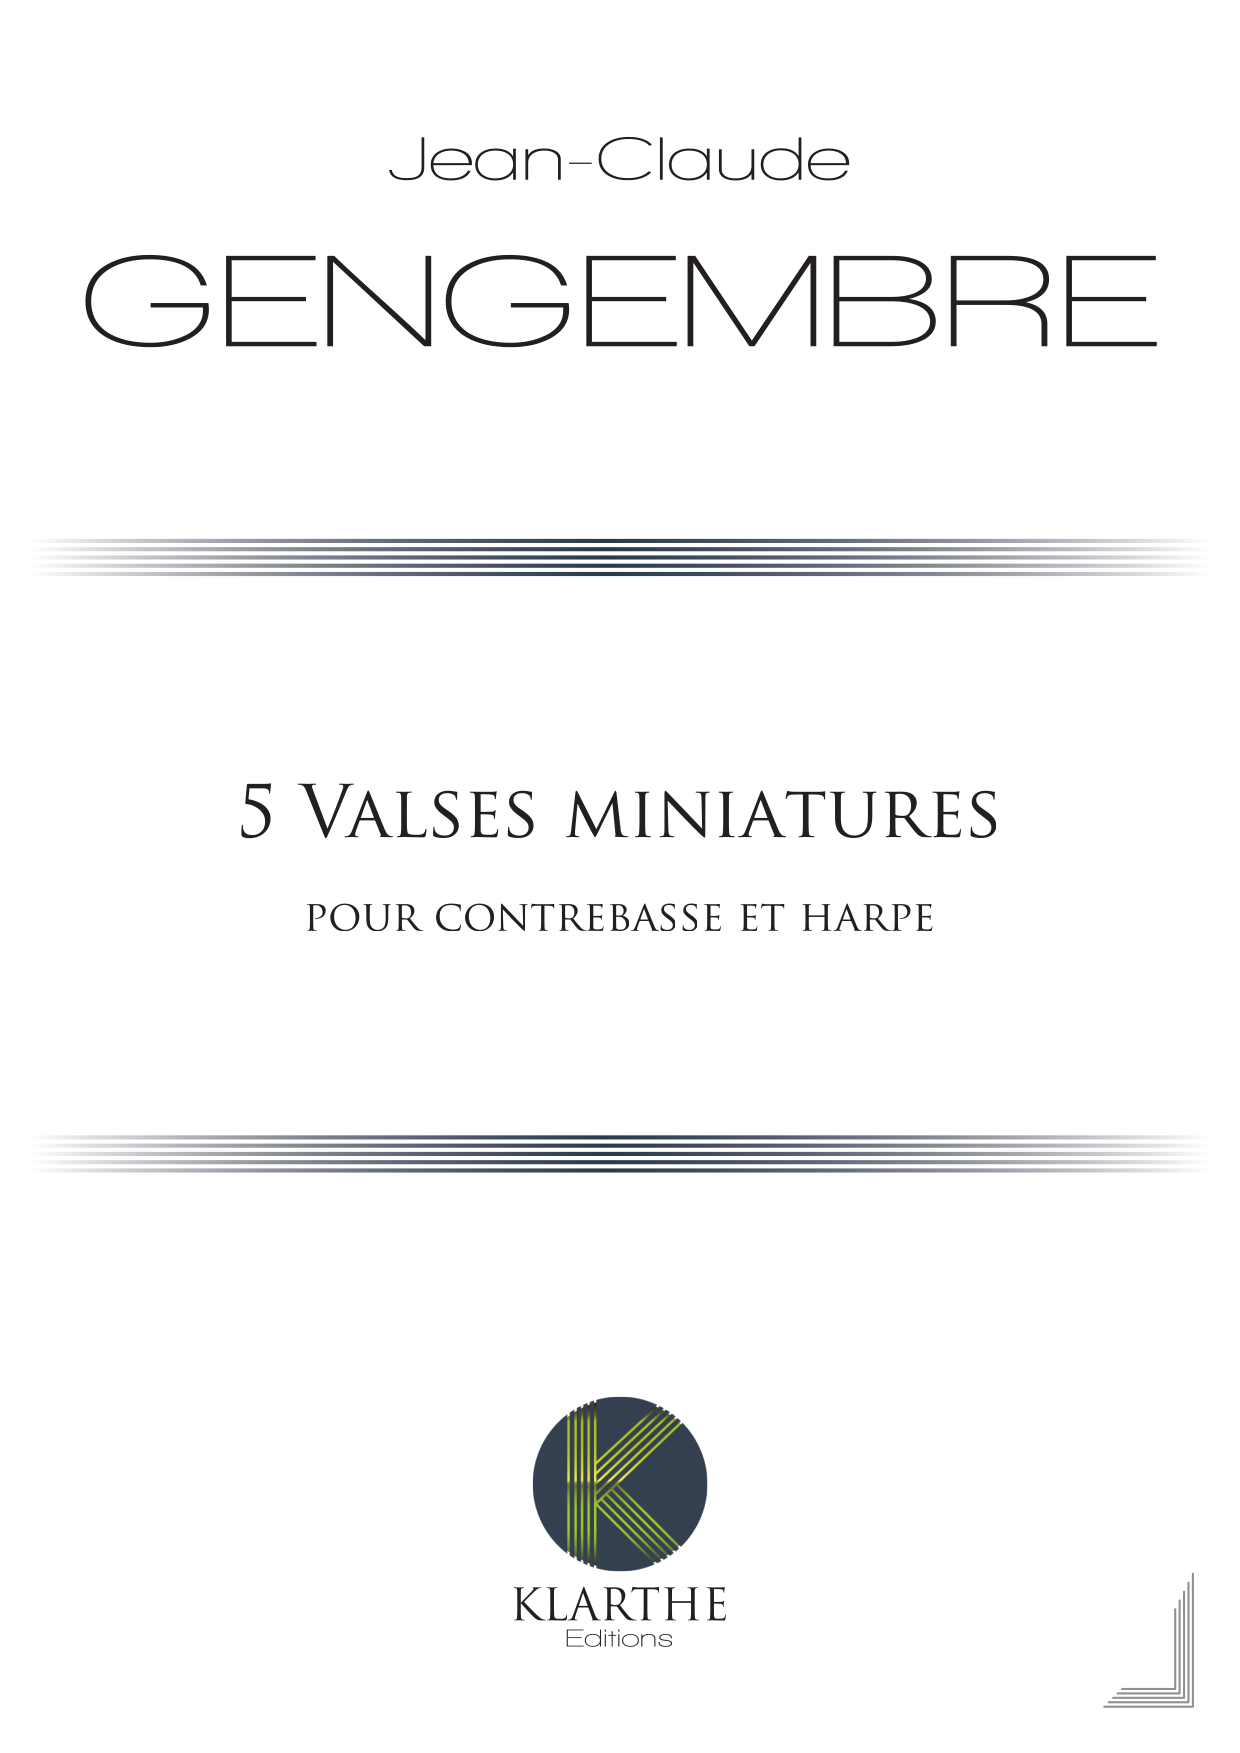 5 Valses miniatures (GENGEMBRE JEAN-CLAUDE)